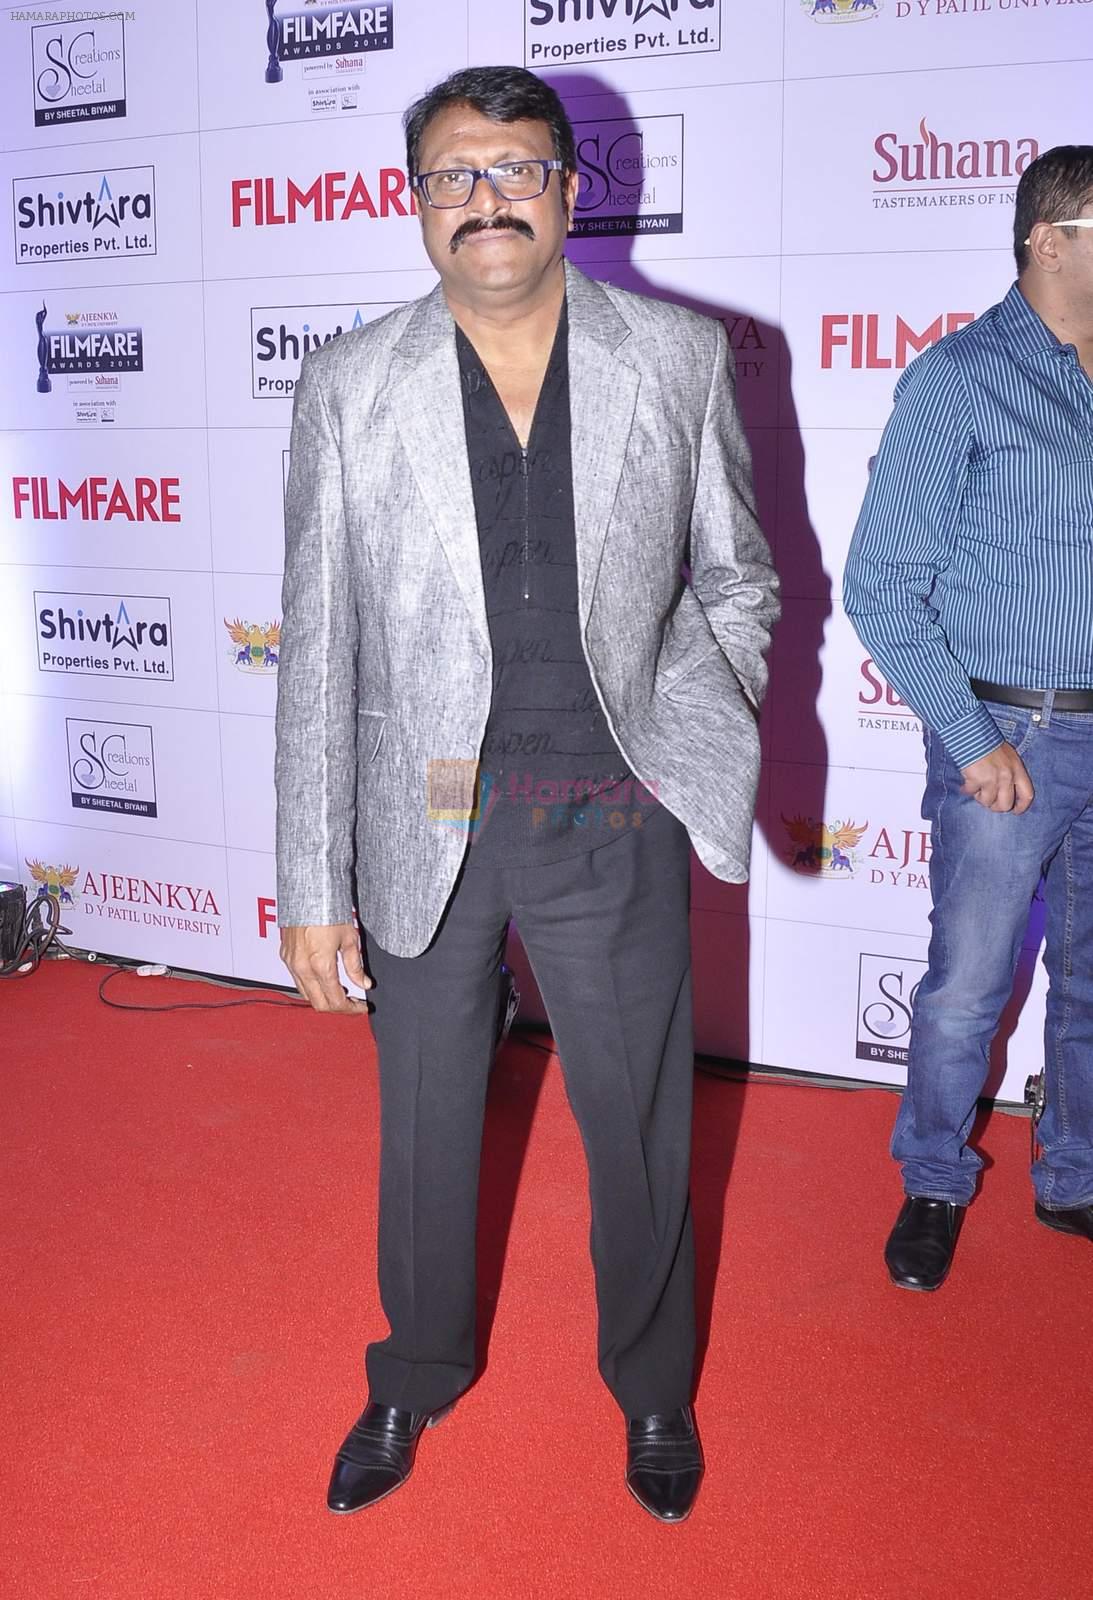 Vijay Patkar at the Red Carpet of _Ajeenkya DY Patil University Filmfare Awards